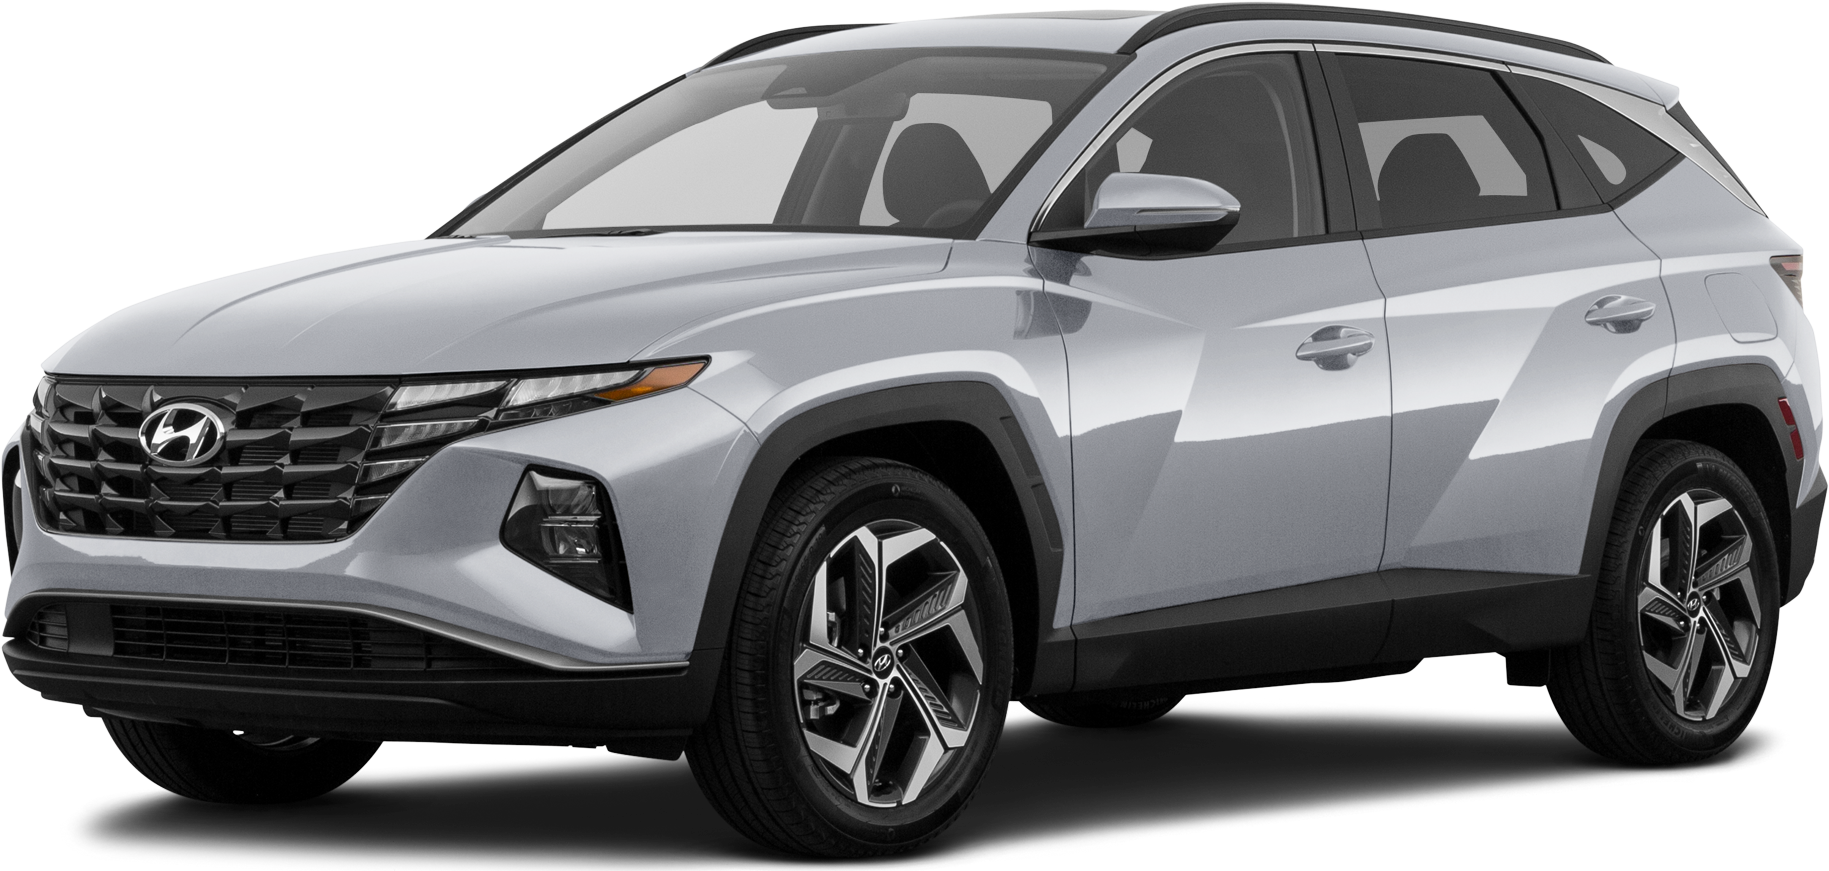 2022 Hyundai Tucson Hybrid Limited AWD: Extra Power and Efficiency